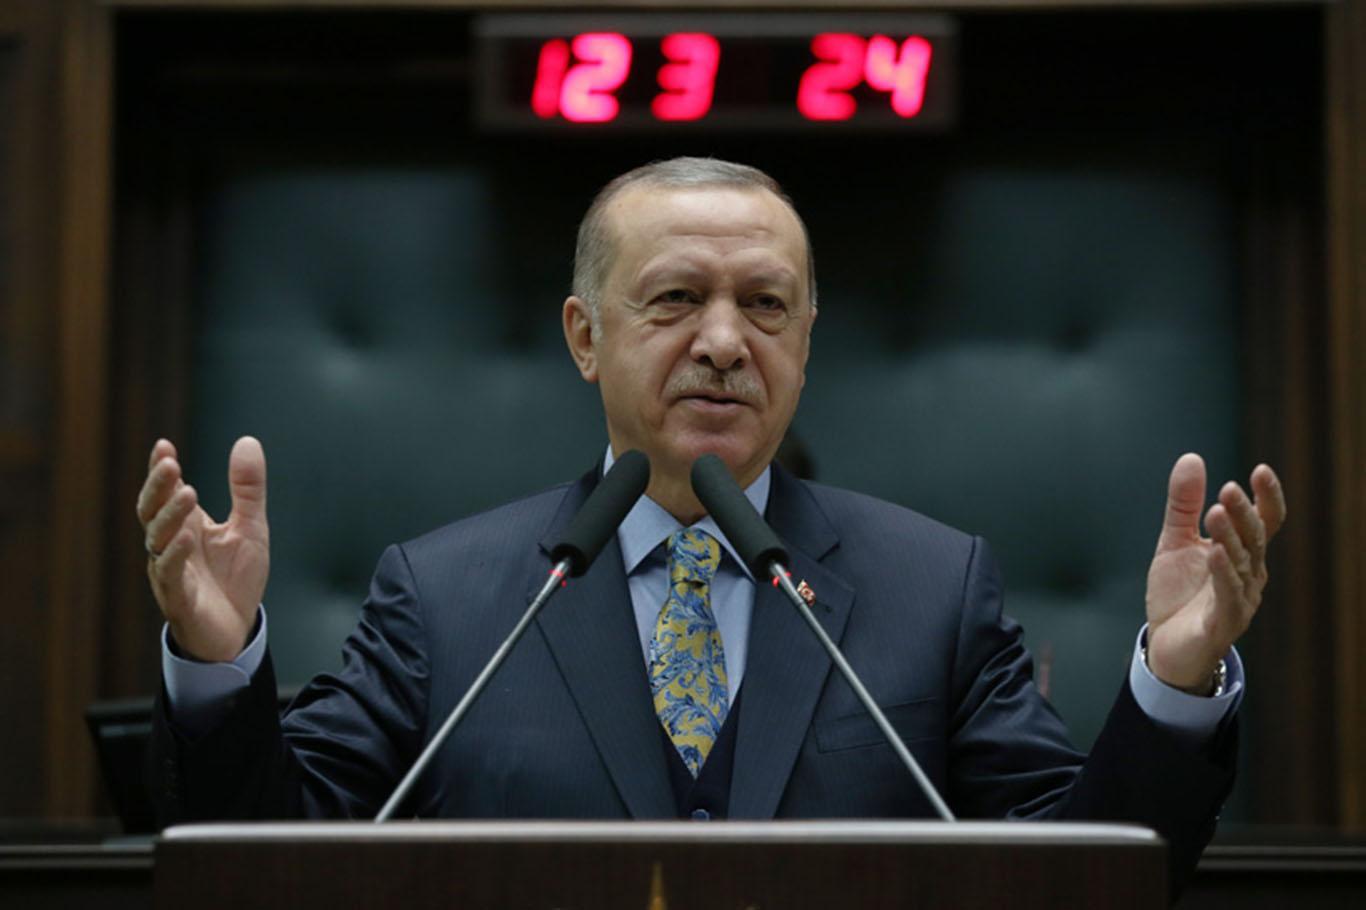 They plan to spread Syria crisis into our lands: Erdoğan